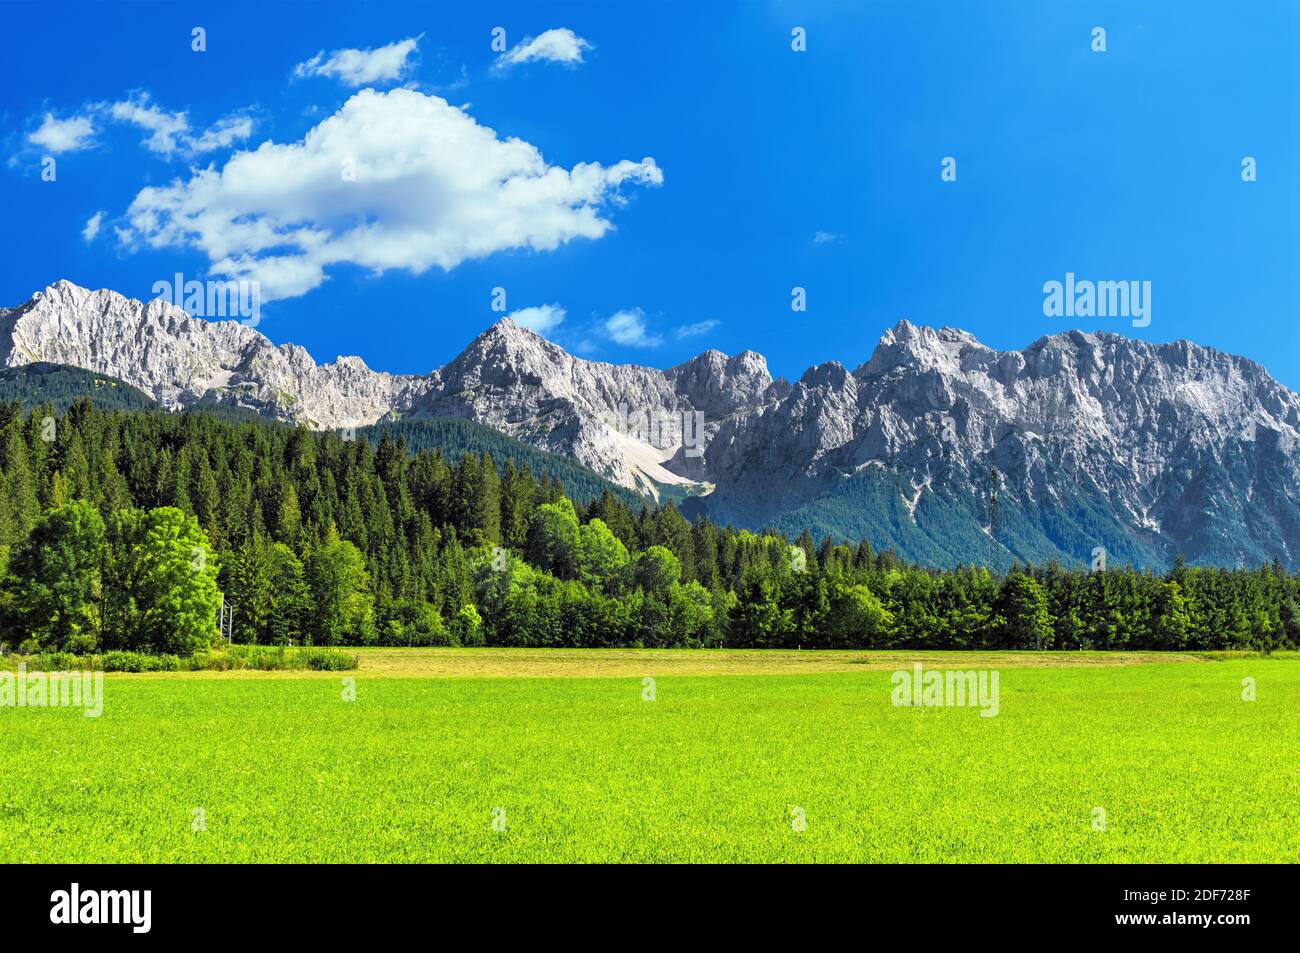 Alps mountain landscape, Bavaria Germany Stock Photo